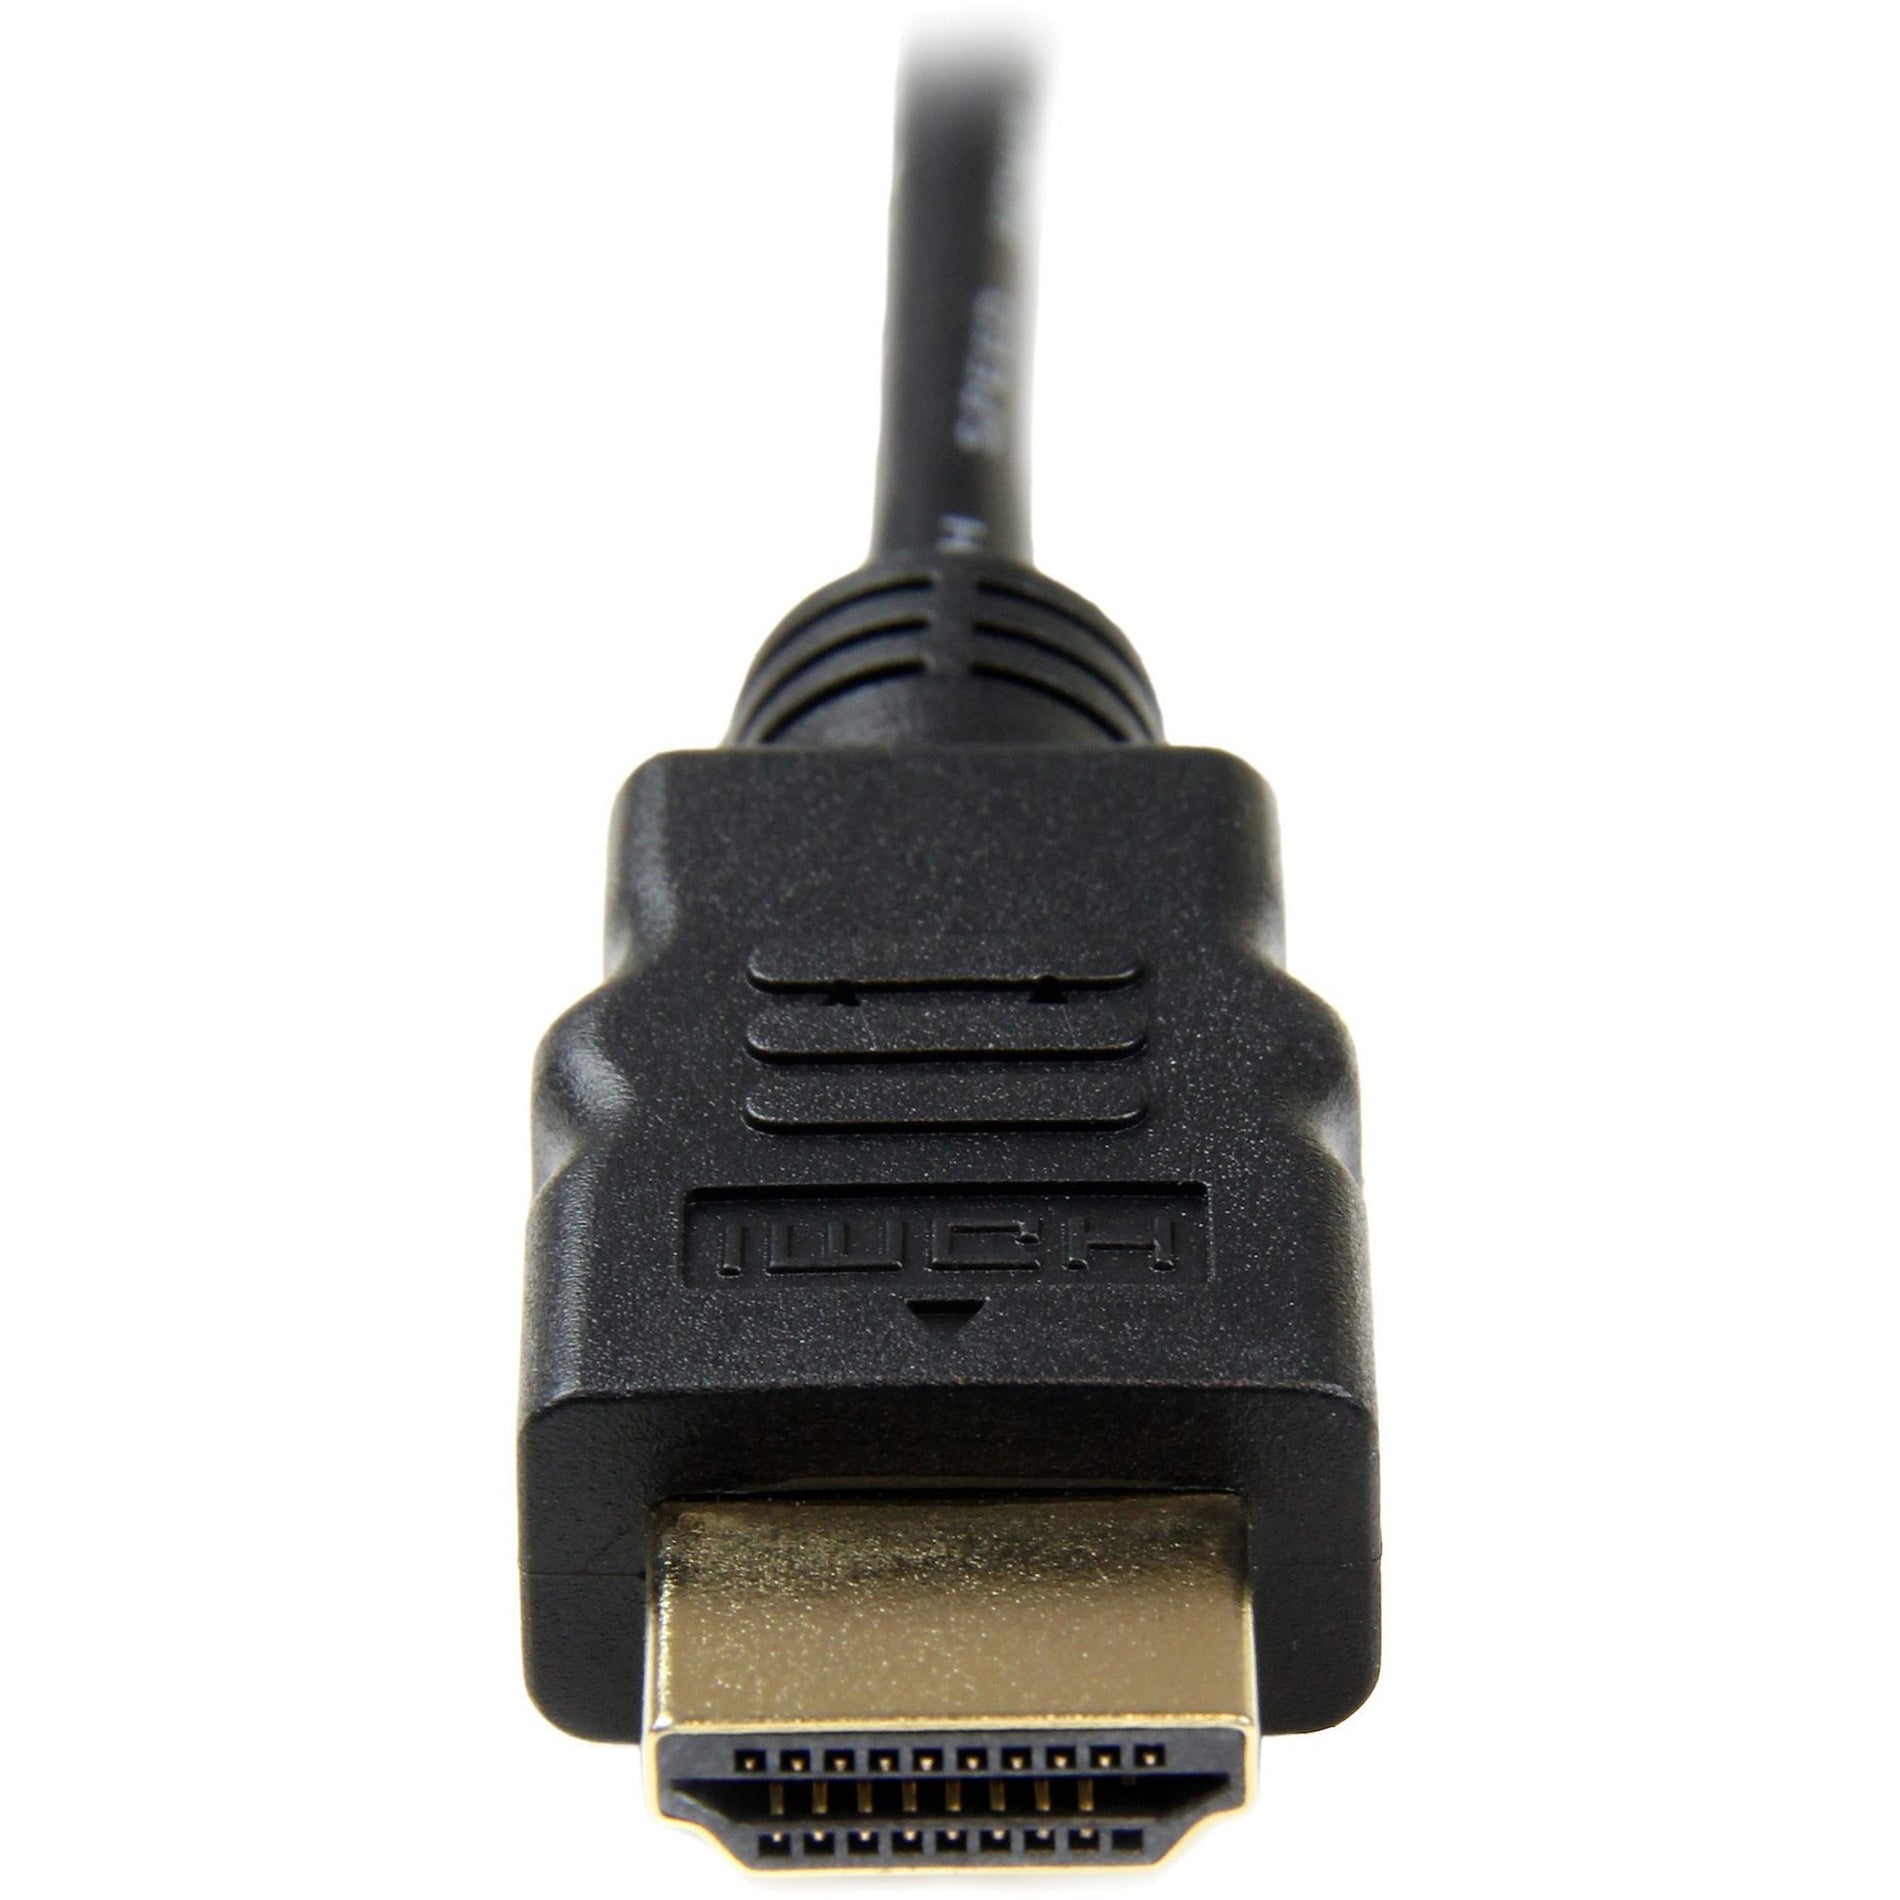 StarTech.com  HDMIADMM3  3 英尺 高速 HDMI 线缆 与 以太网 - HDMI 至 HDMI 微型 - M/M， 支持 4K， 镀金 连接器， 黑色 施泰科品牌。施泰科 是品牌名称。